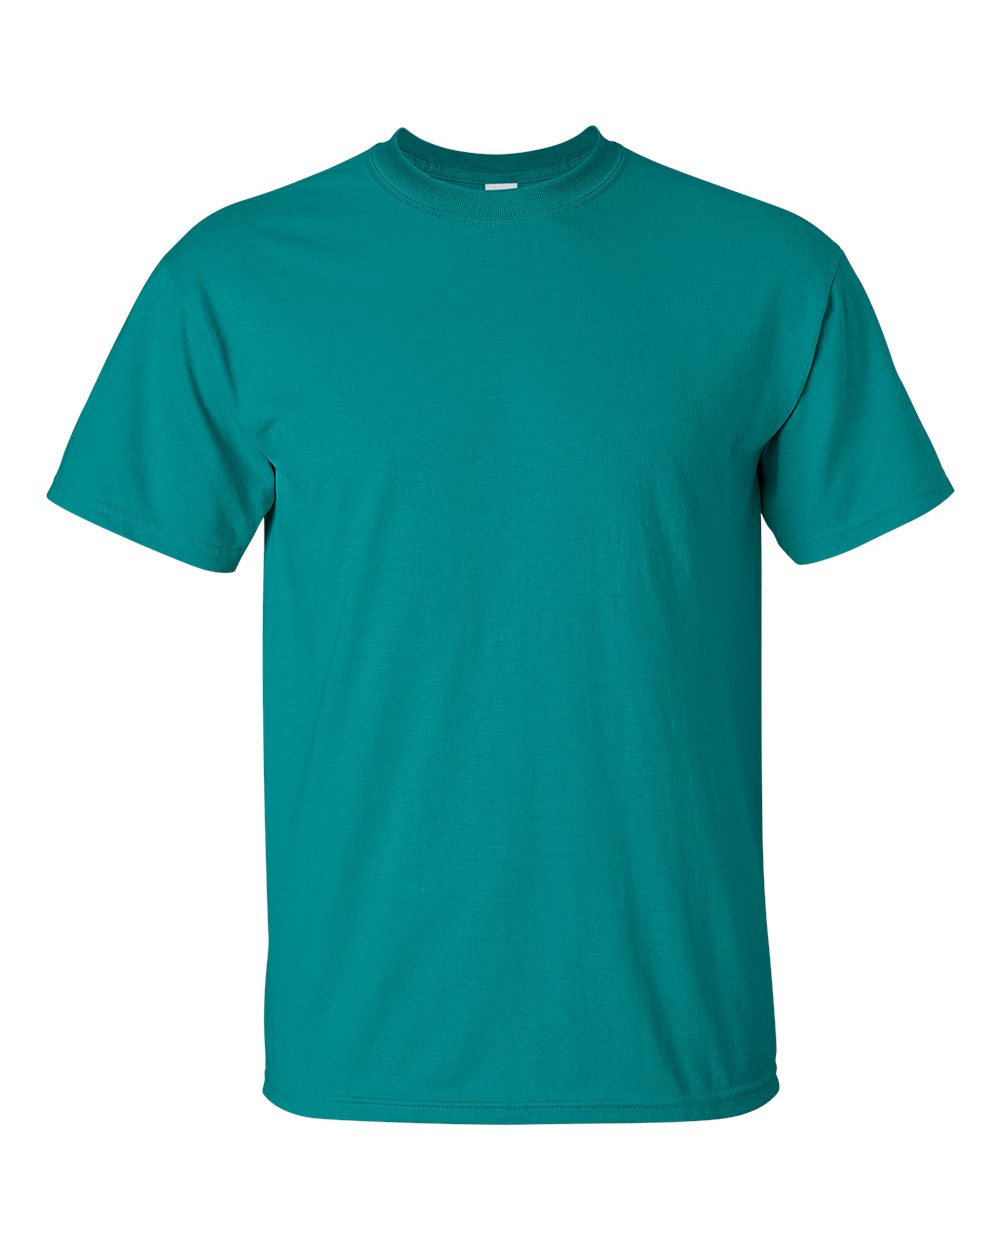 Gildan 2000 Ultra Cotton T-Shirt :: Jade Dome, Size 3X